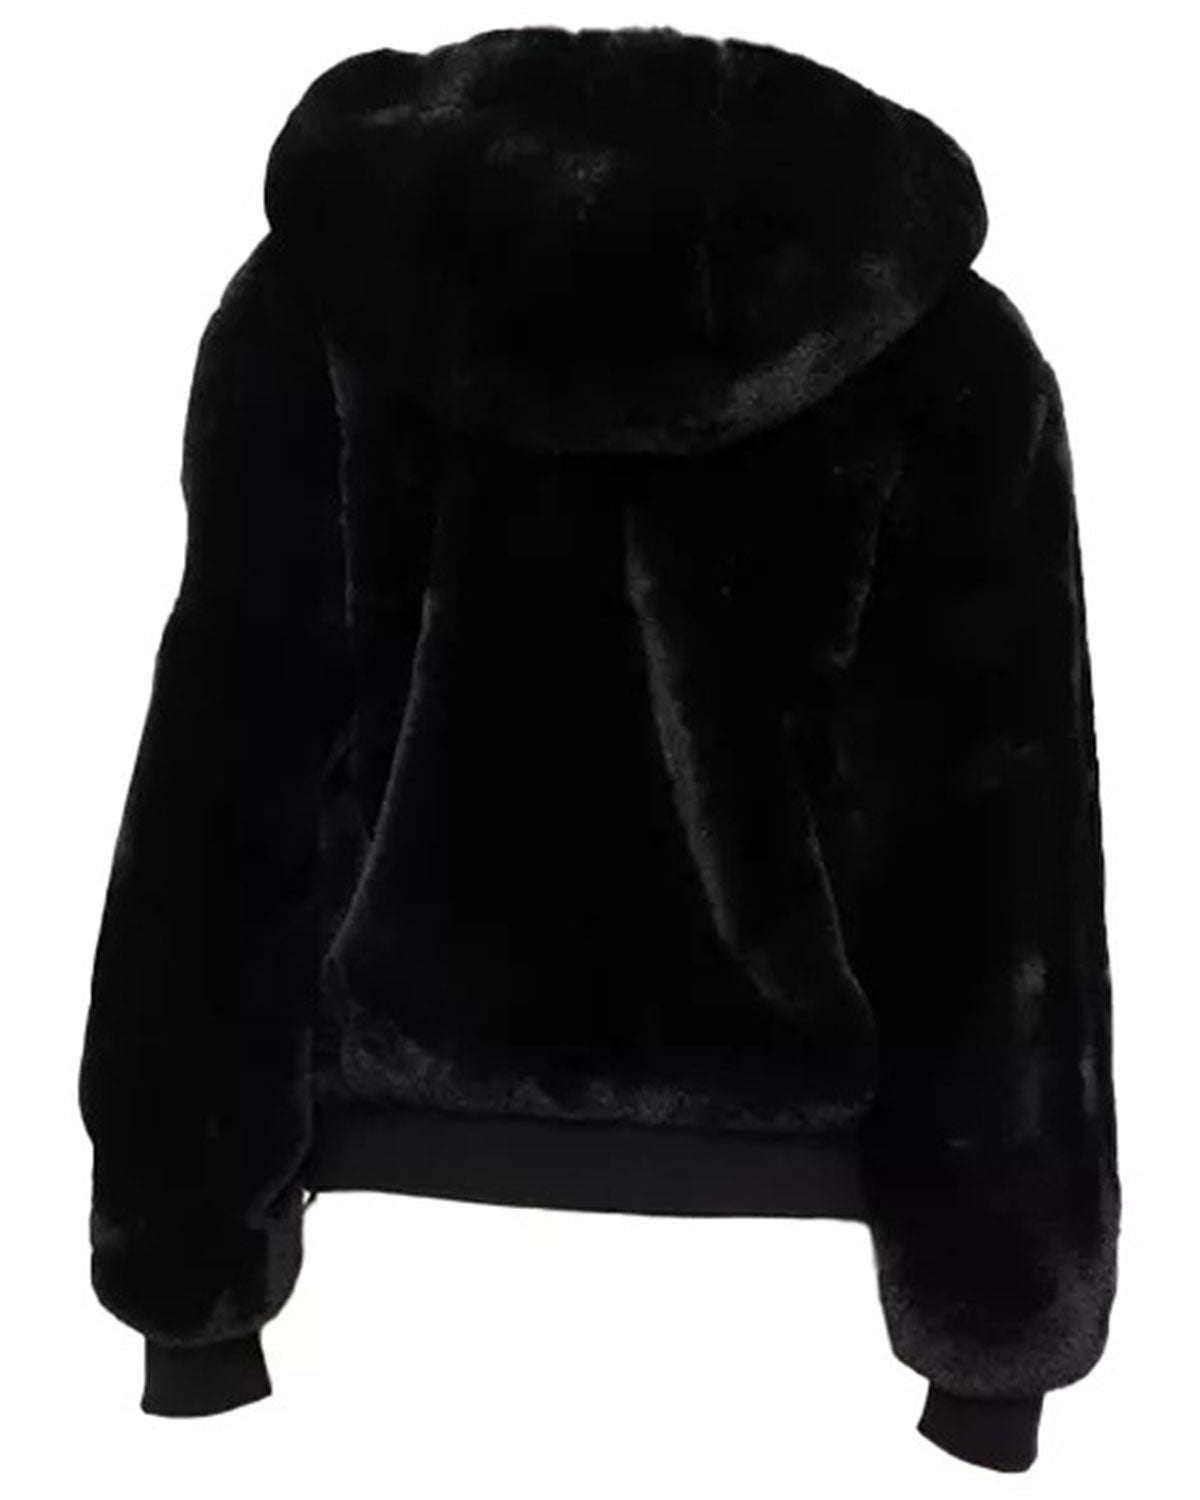 Elite Black Faux Fur Hooded Jacket